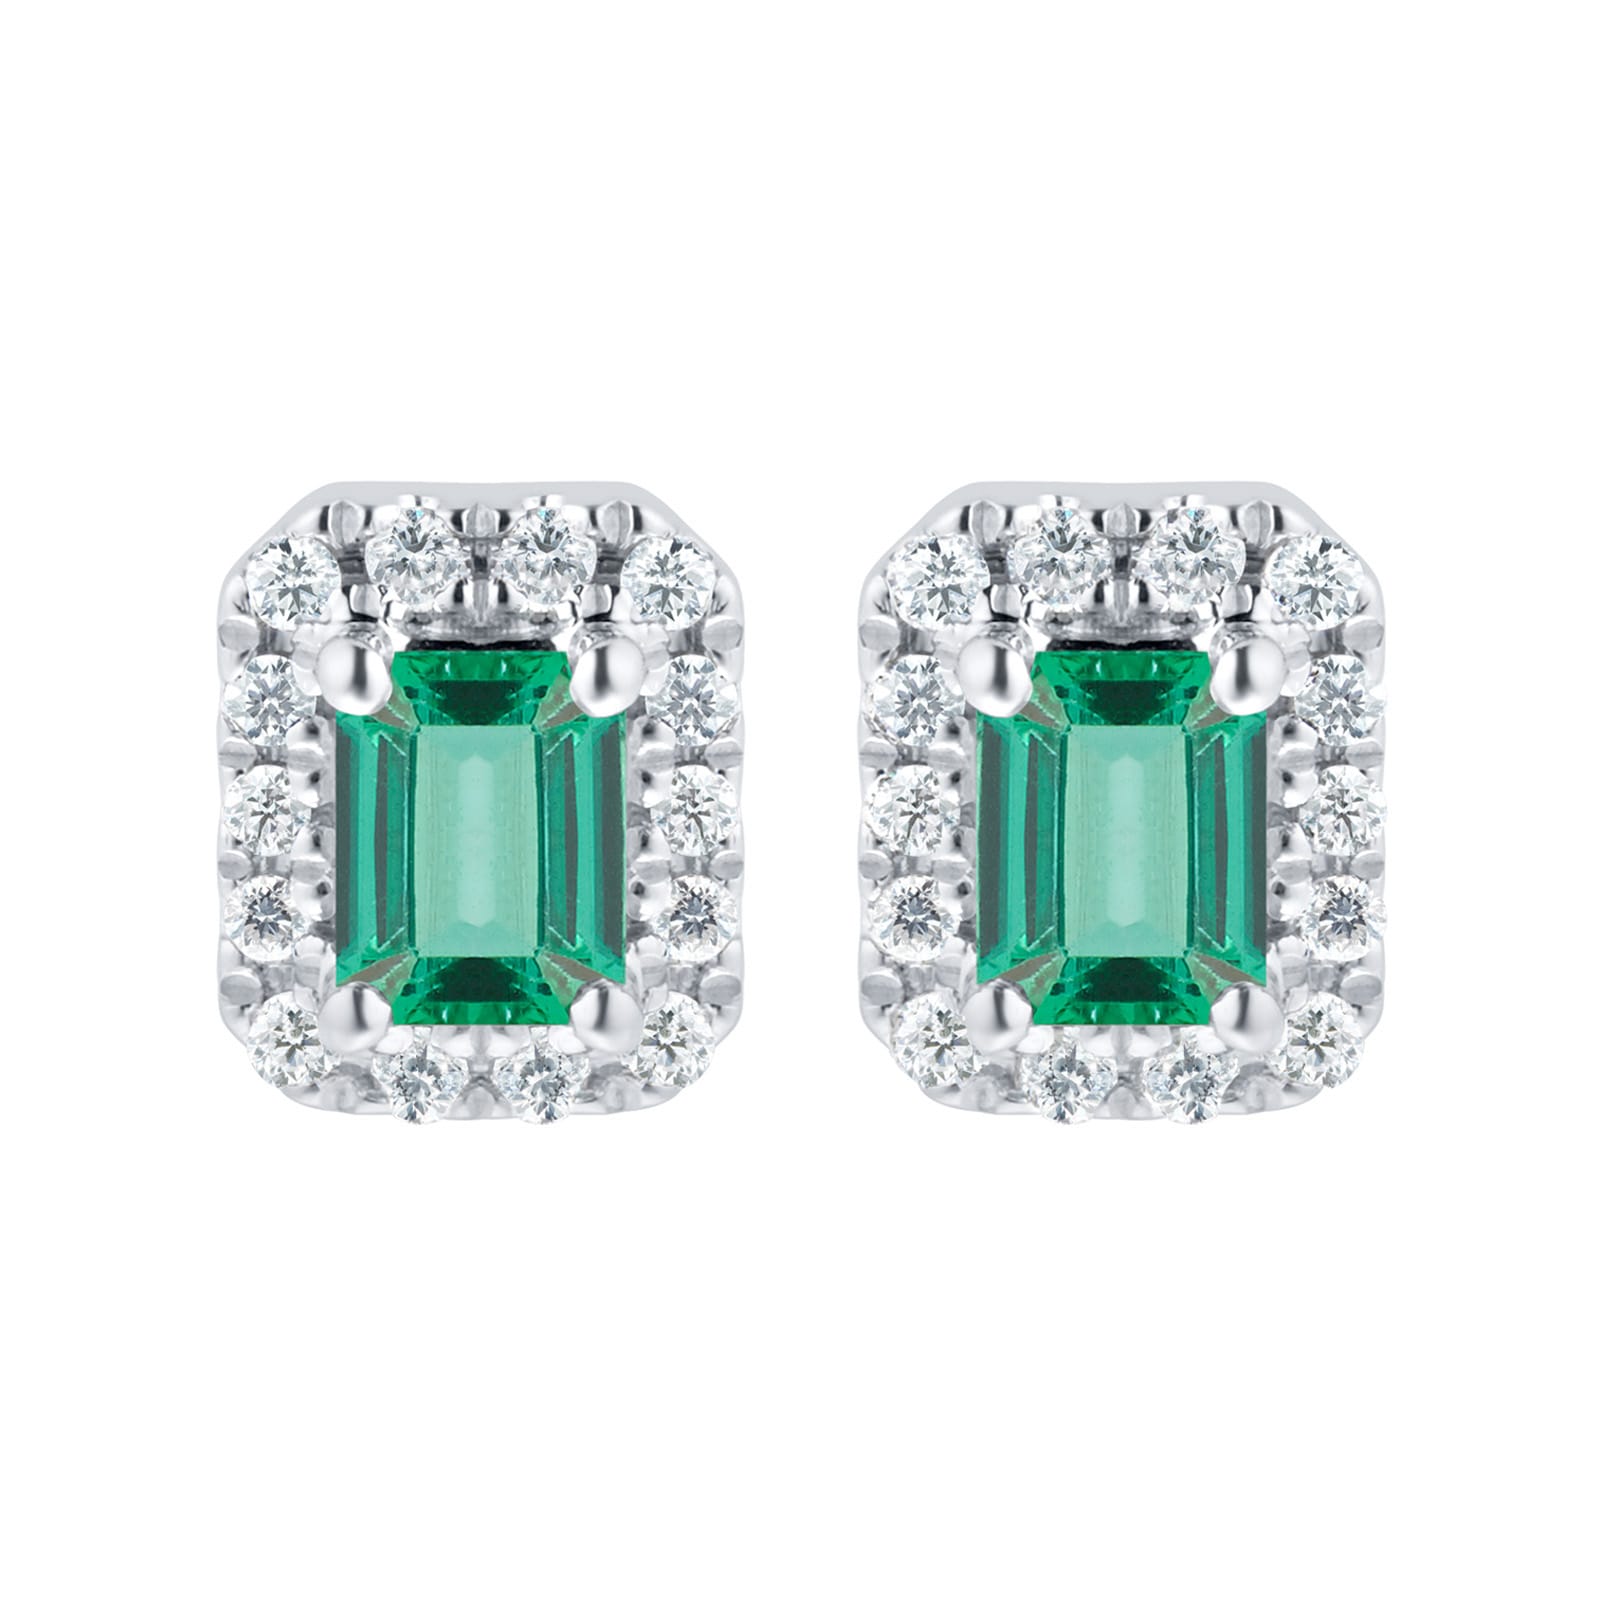 9ct White Gold Emerald Cut Halo Stud Earrings